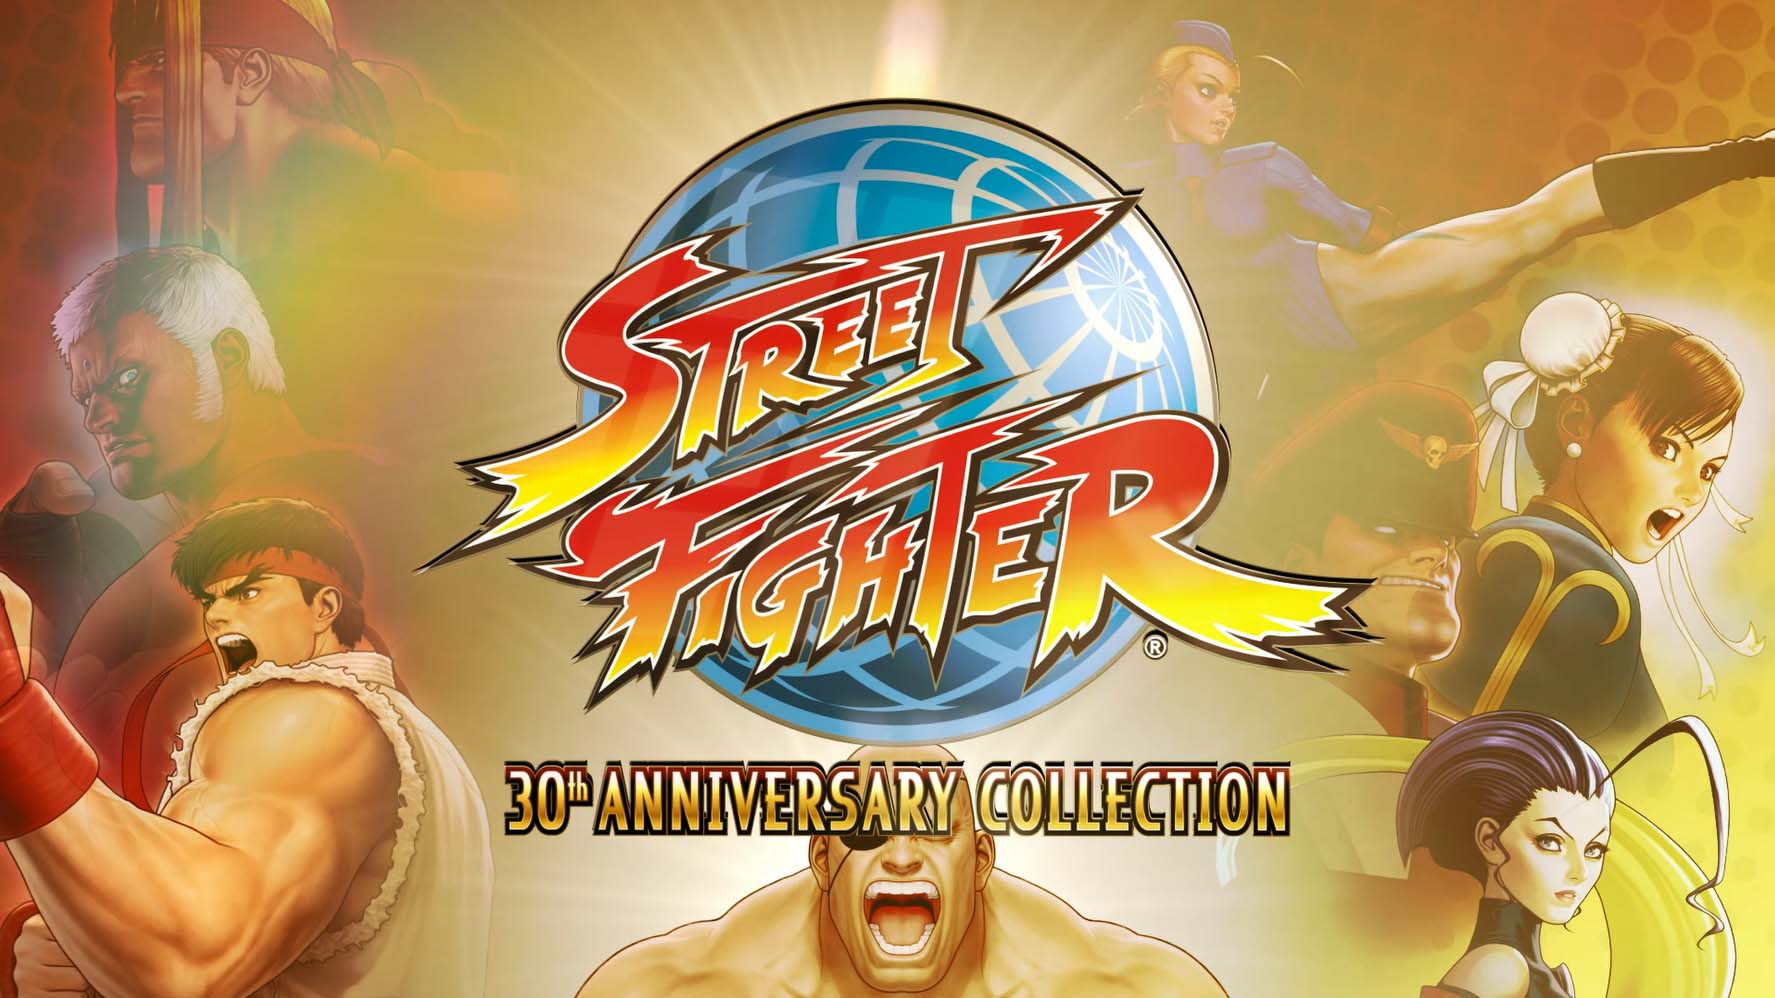 Street Fighter 30th Anniversary Collection includes a dozen classics